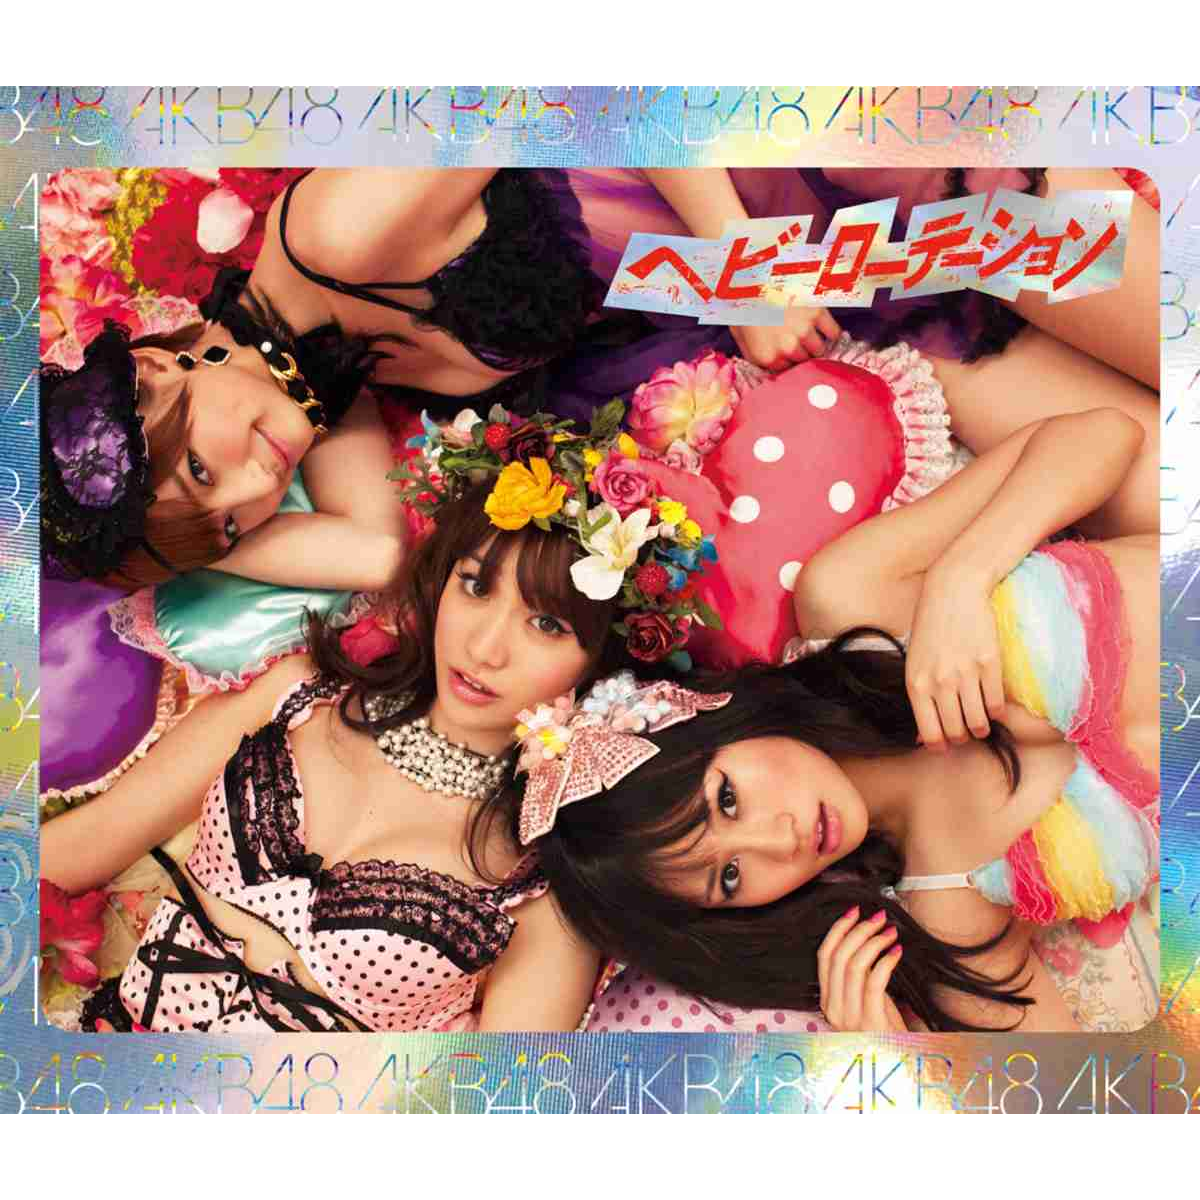 AKB48 Heavy Rotation cover artwork